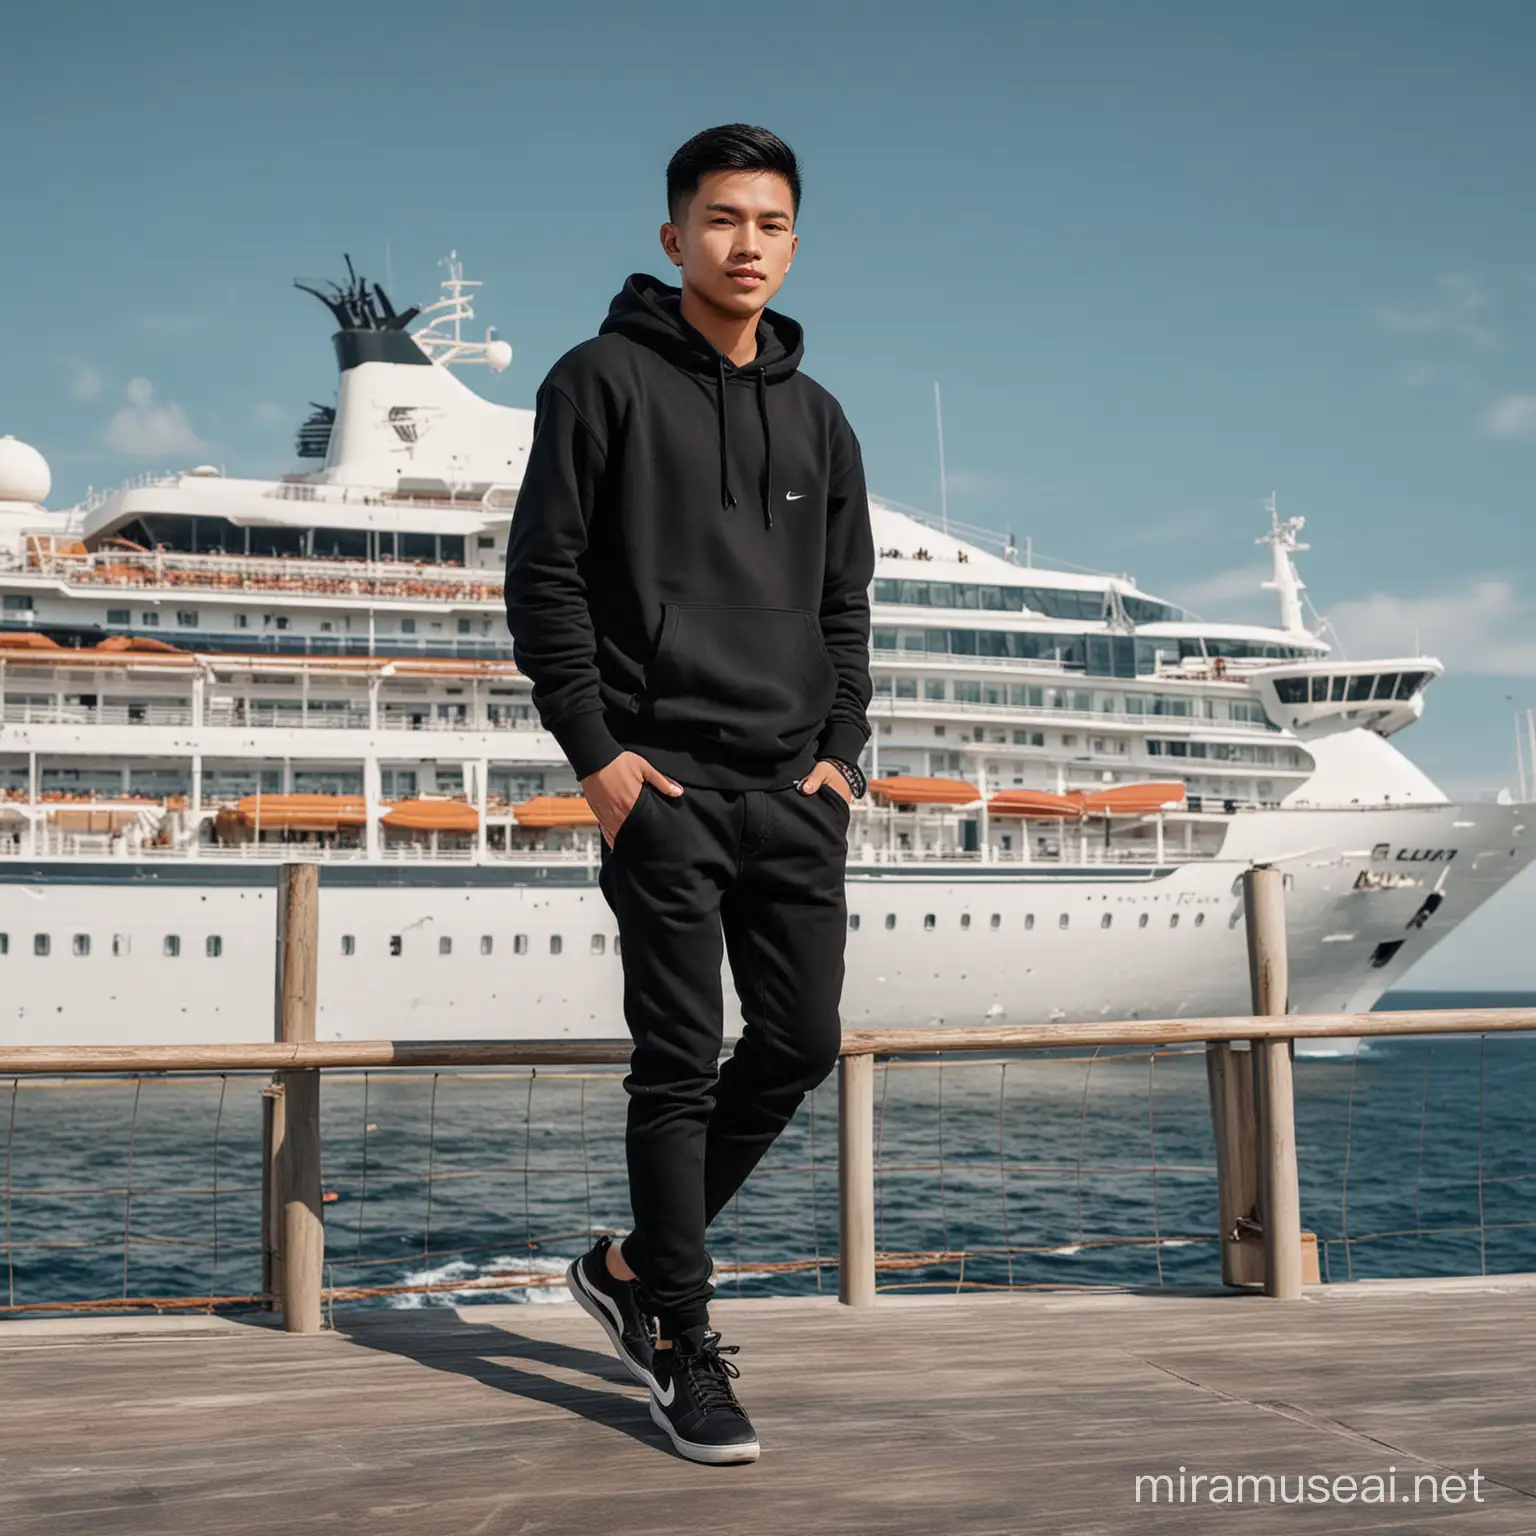 Stylish Indonesian Man in Black Attire on Luxurious Cruise Ship